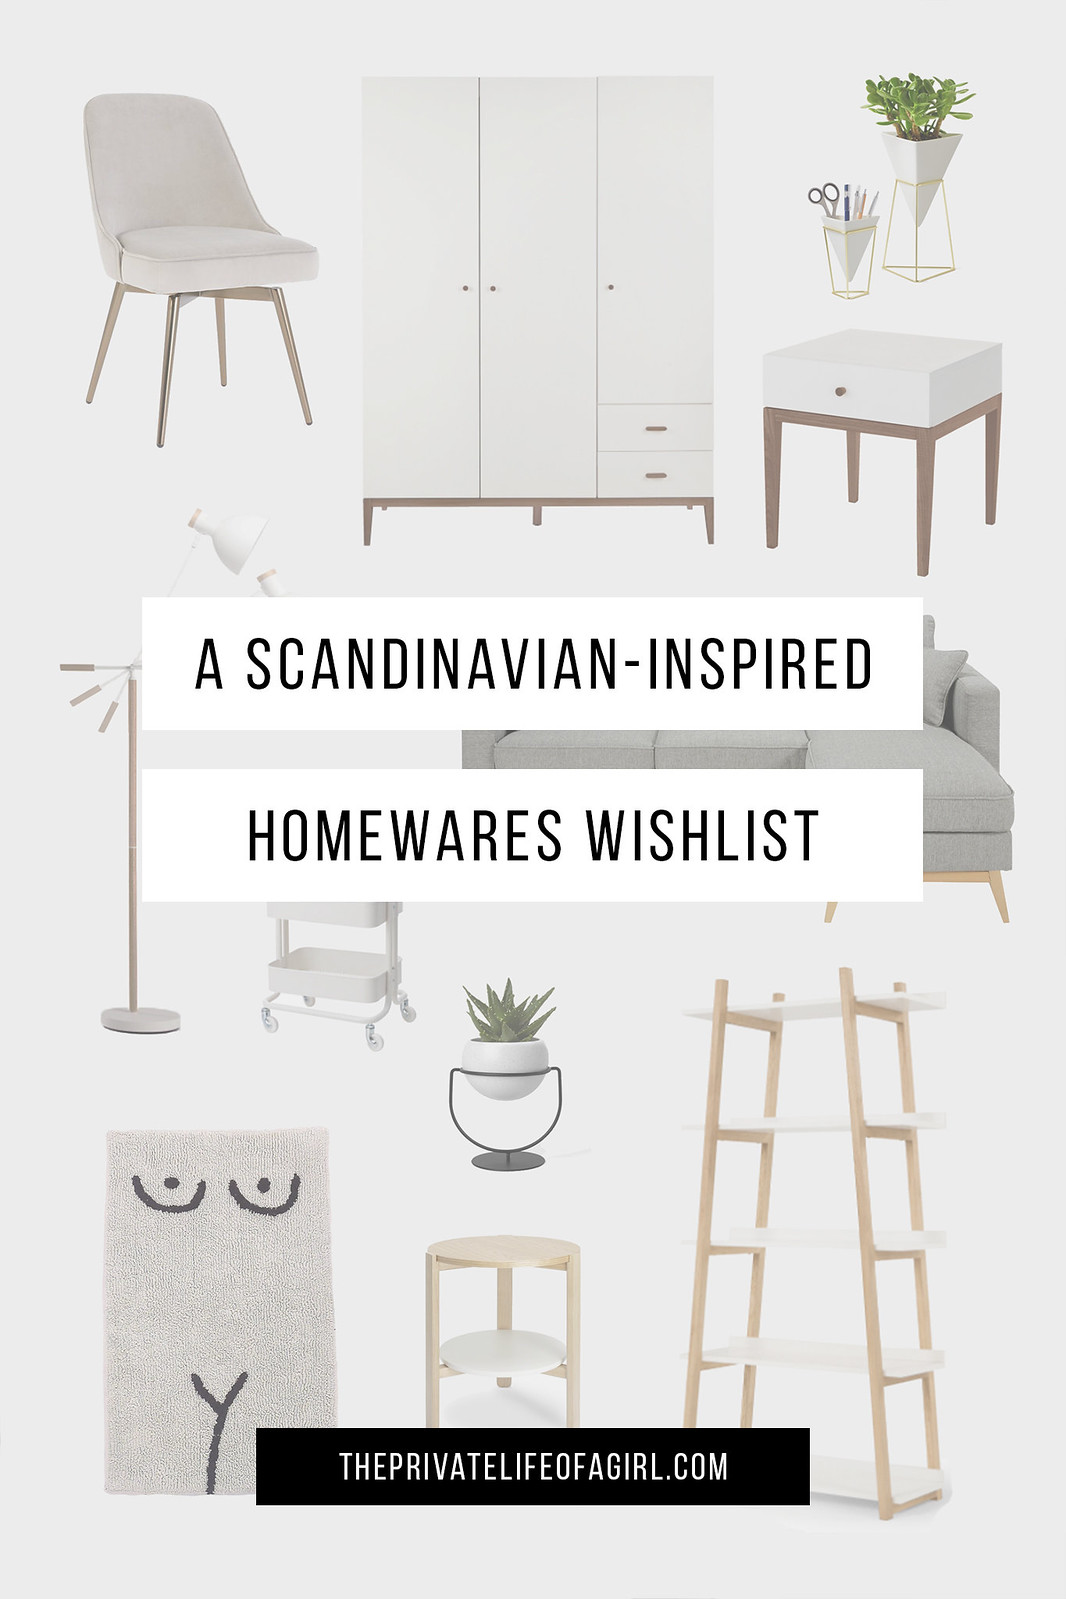 A Scandinavian-Inspired Homewares Wishlist